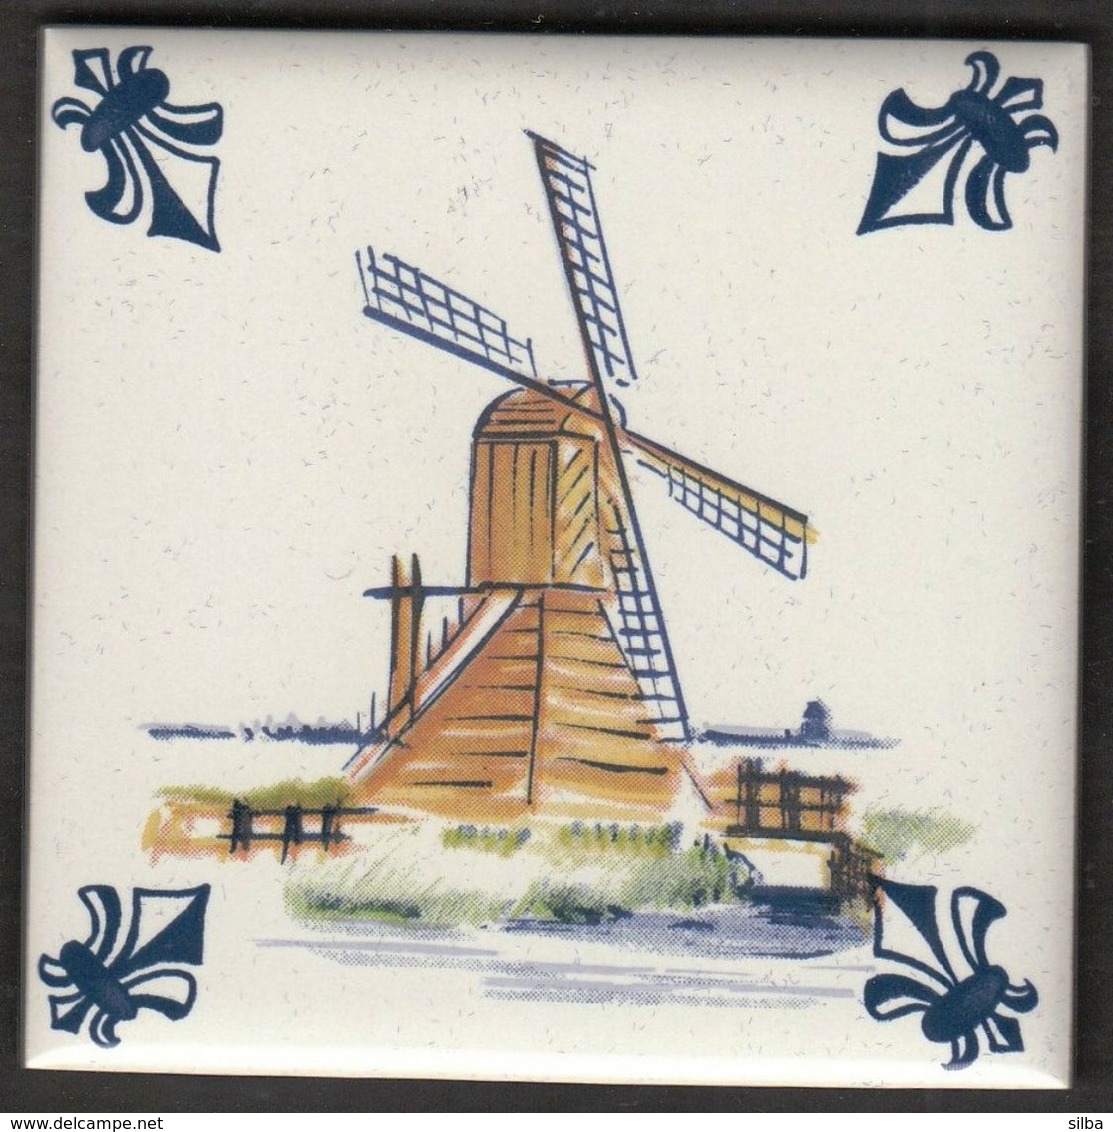 Netherlands / KLM Business Class / Delft Polychrome / Porselein Tegel / Porcelain Tile / A 9 - Drainingmill - Delft (NLD)